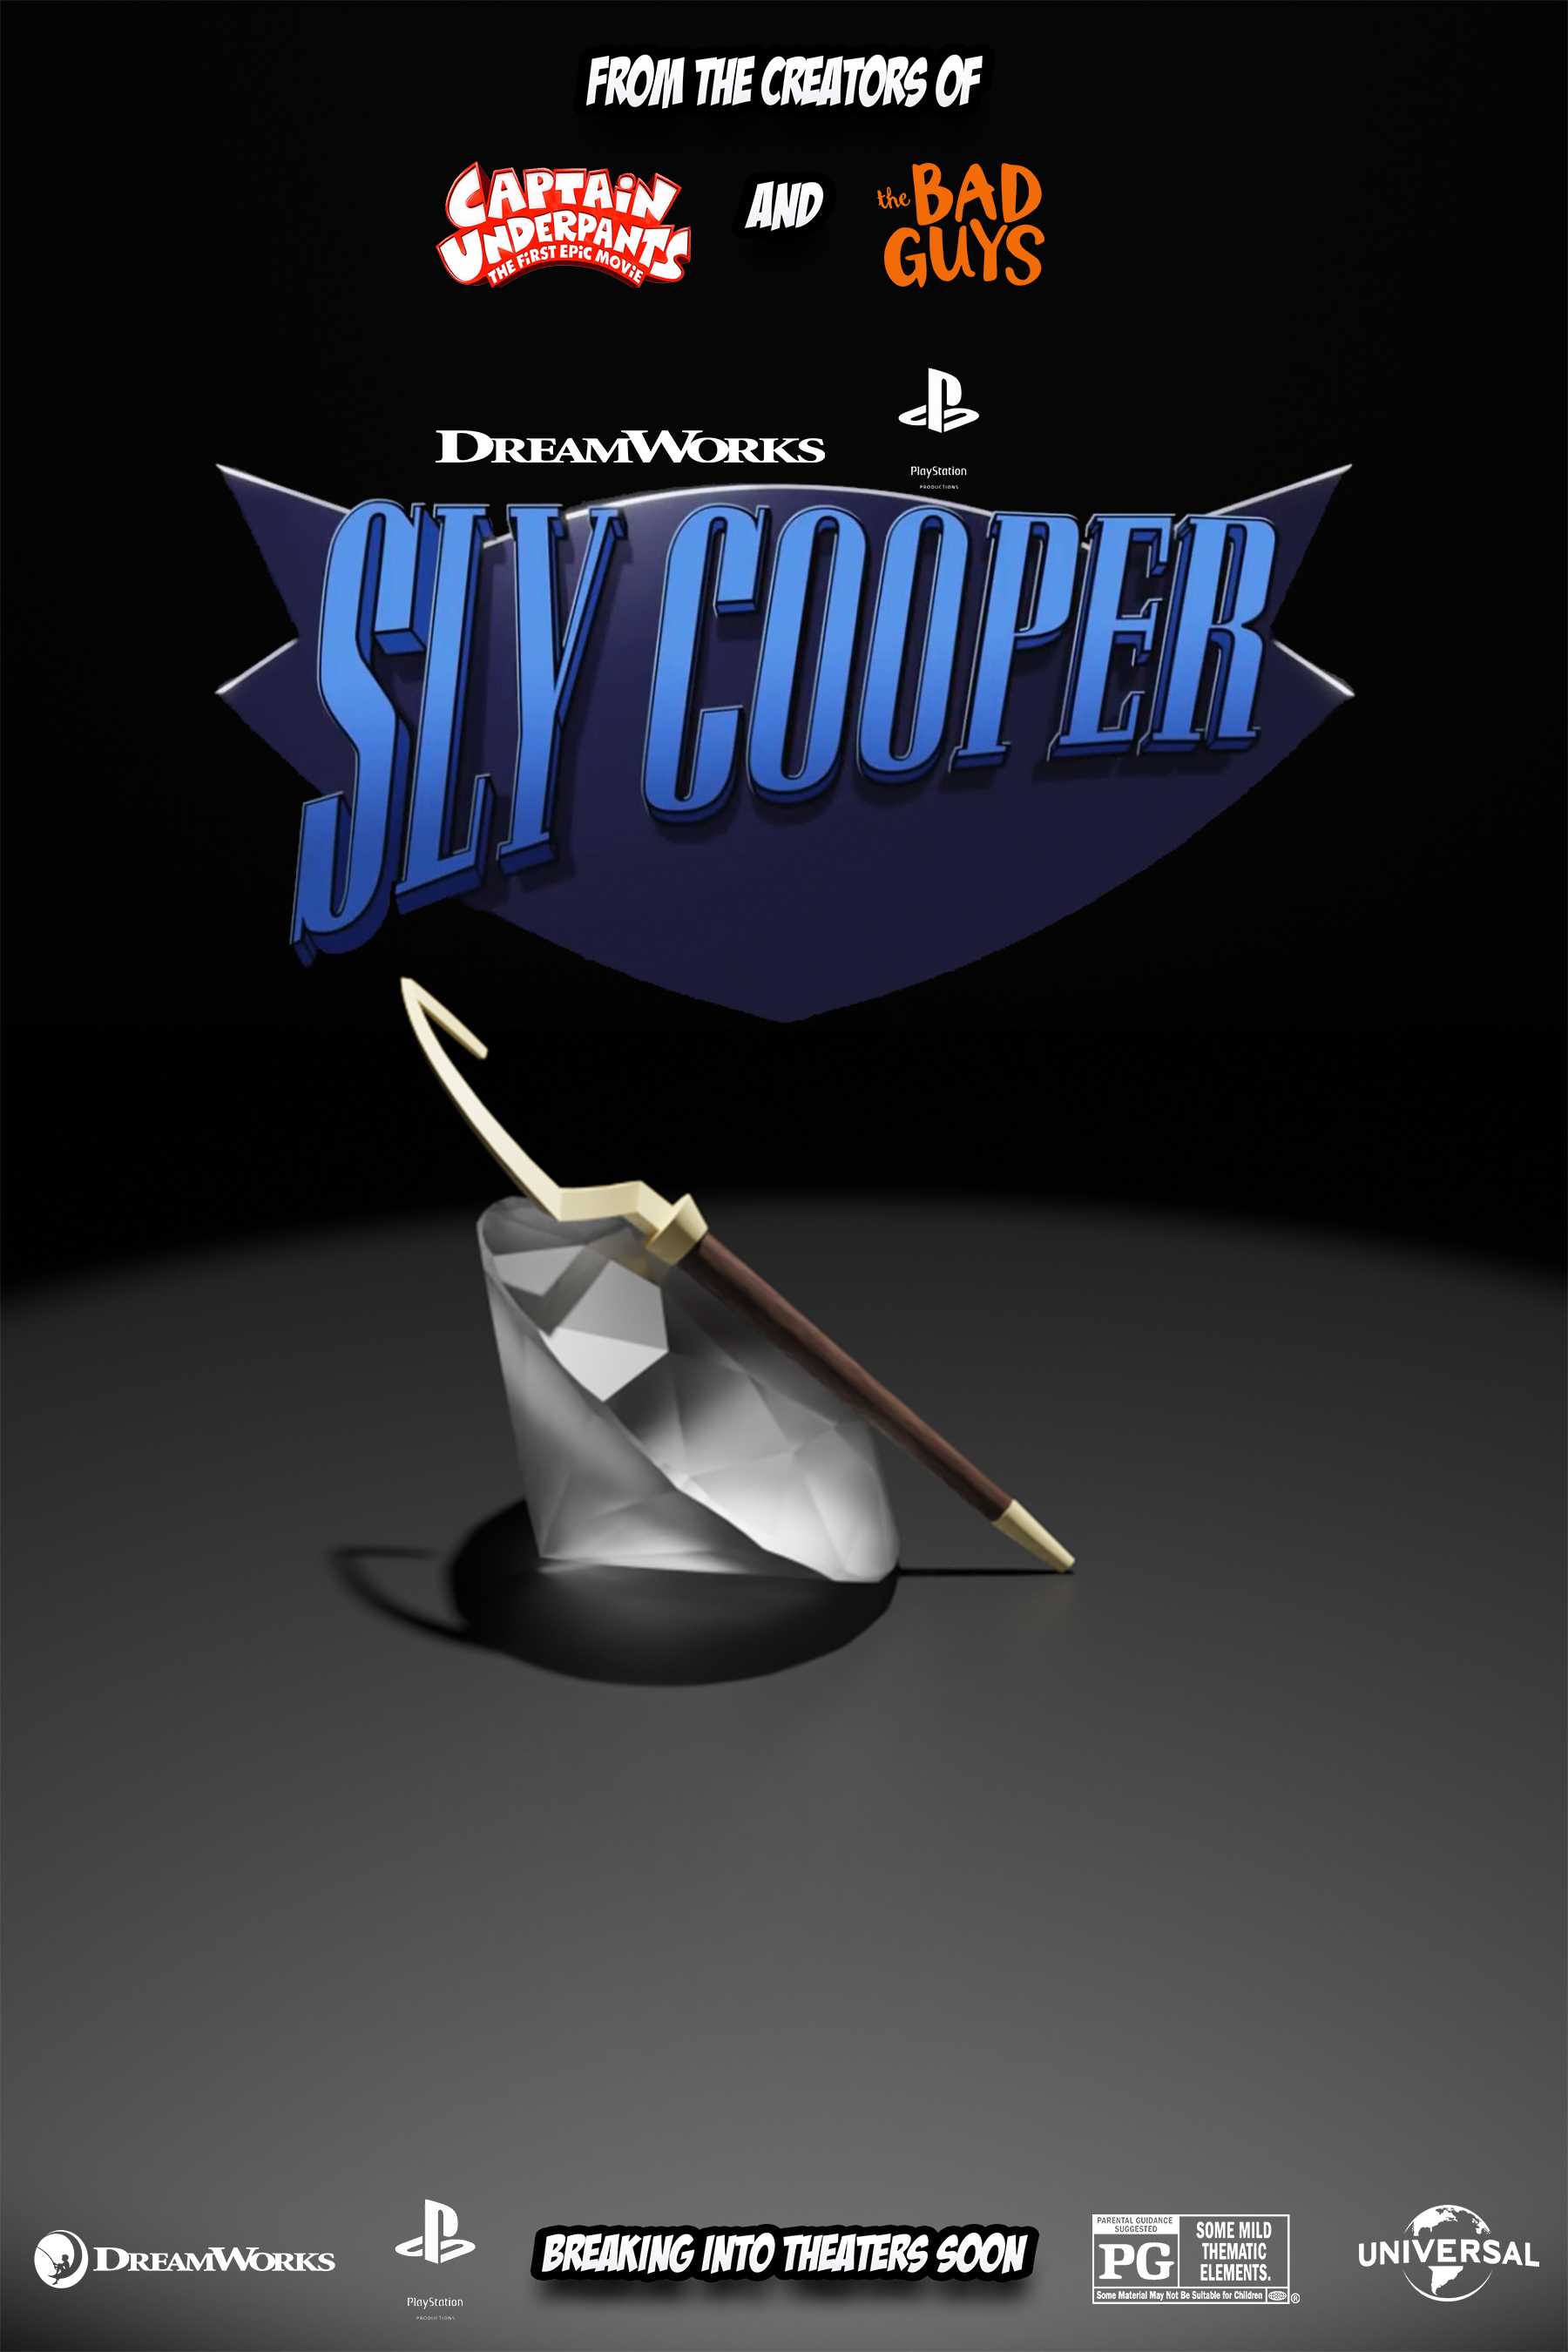 Sly Cooper Movie Poster by Marketey on DeviantArt